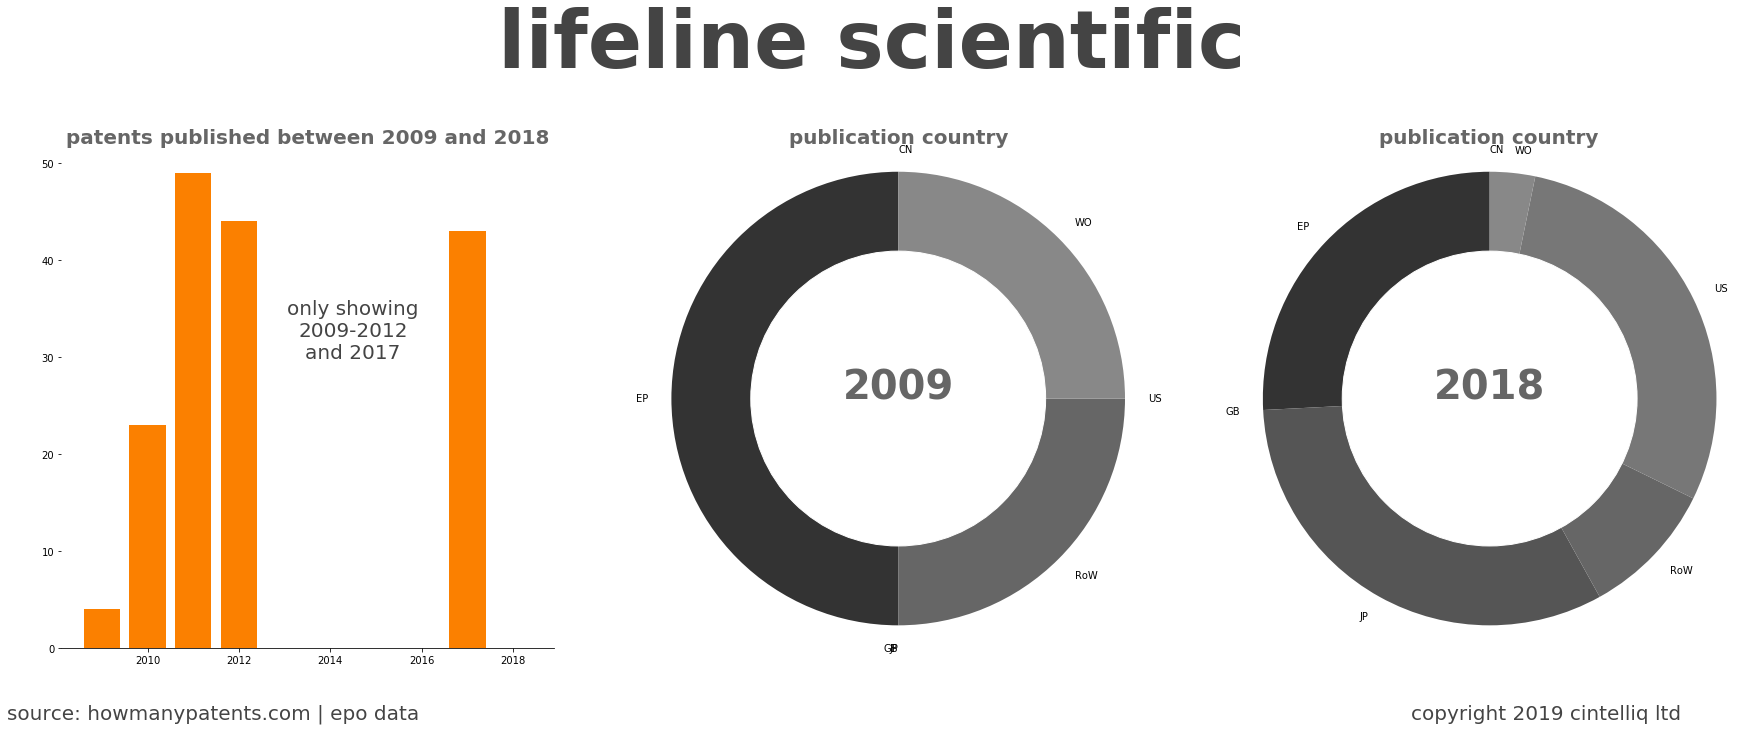 summary of patents for Lifeline Scientific